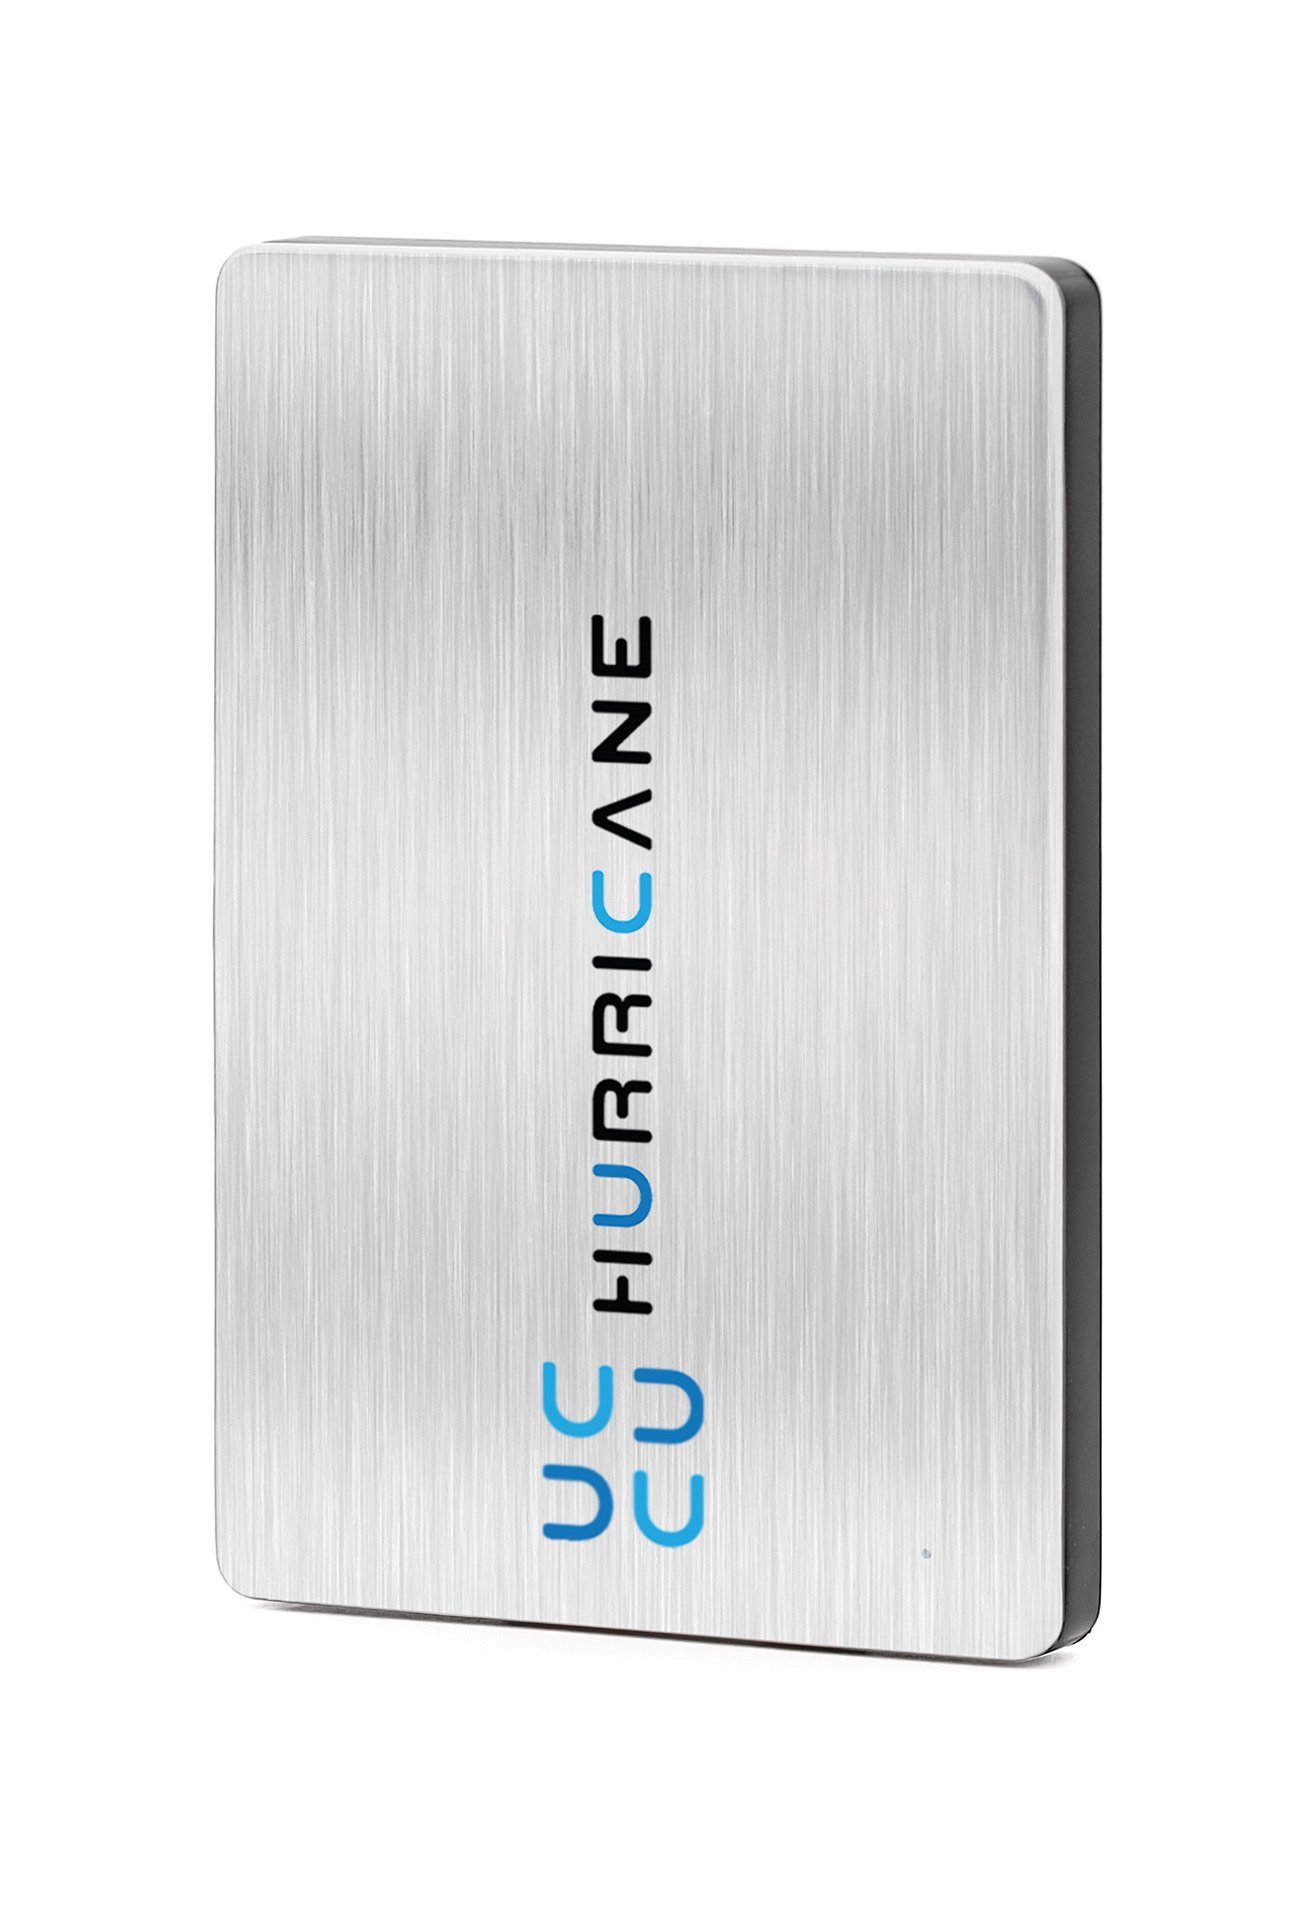 HURRICANE MD25U3 Tragbare Externe Festplatte 500GB 2,5" USB 3.0 externe HDD-Festplatte (500GB) 2,5", für PC Laptop TV PS4 PS5 Xbox, kompatibel mit Windows Mac und Linux